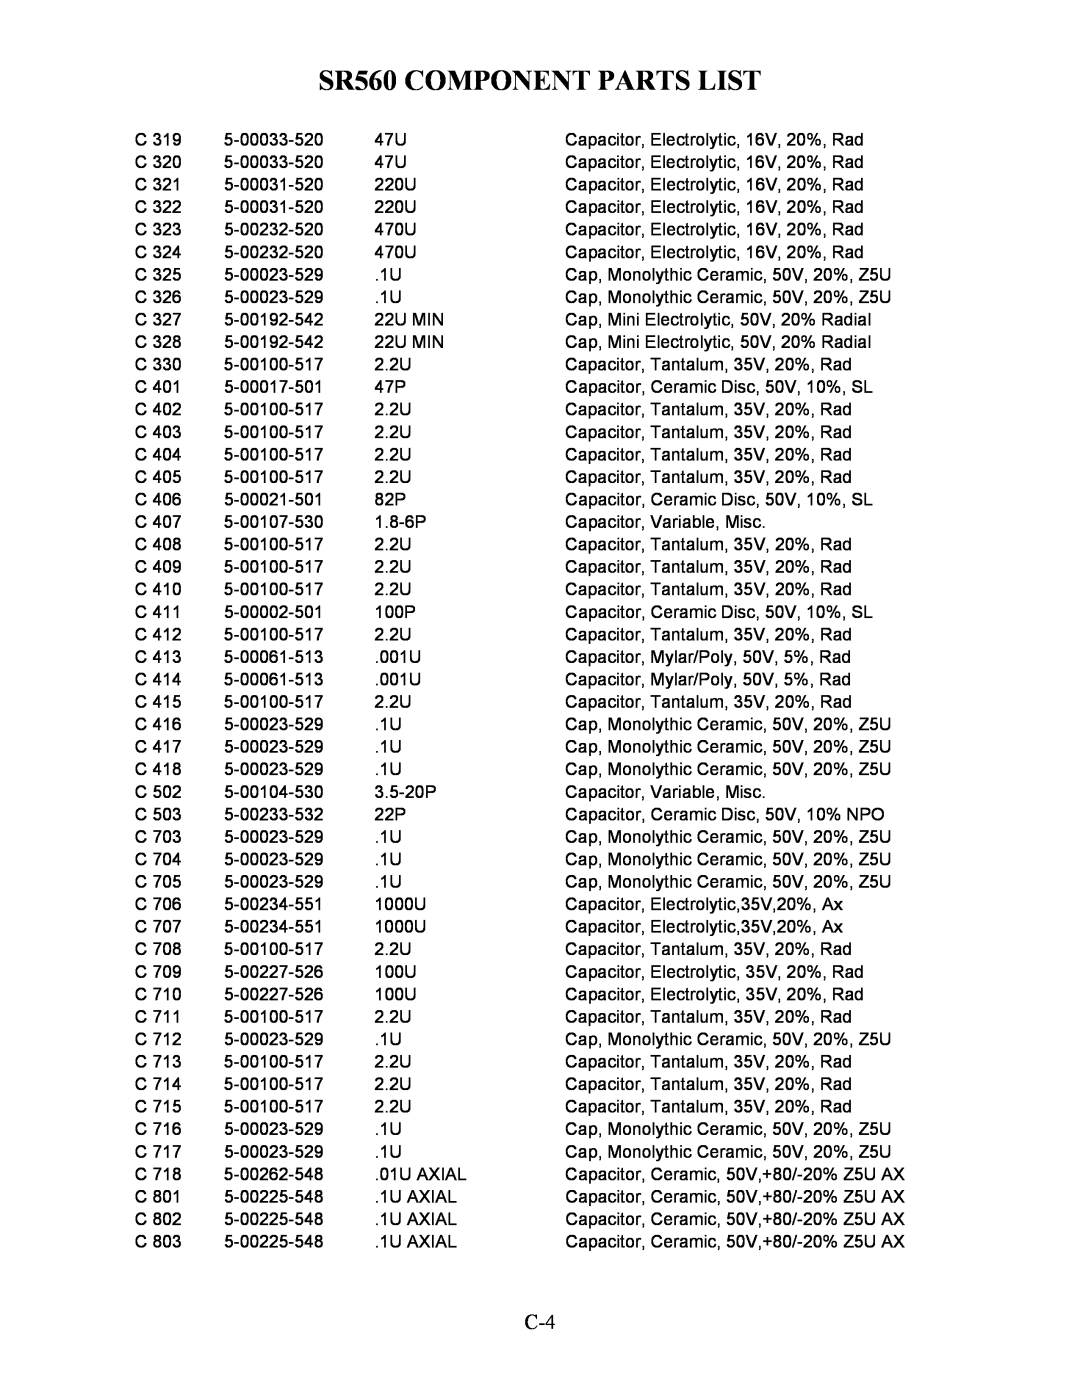 SRS Labs manual SR560 COMPONENT PARTS LIST 